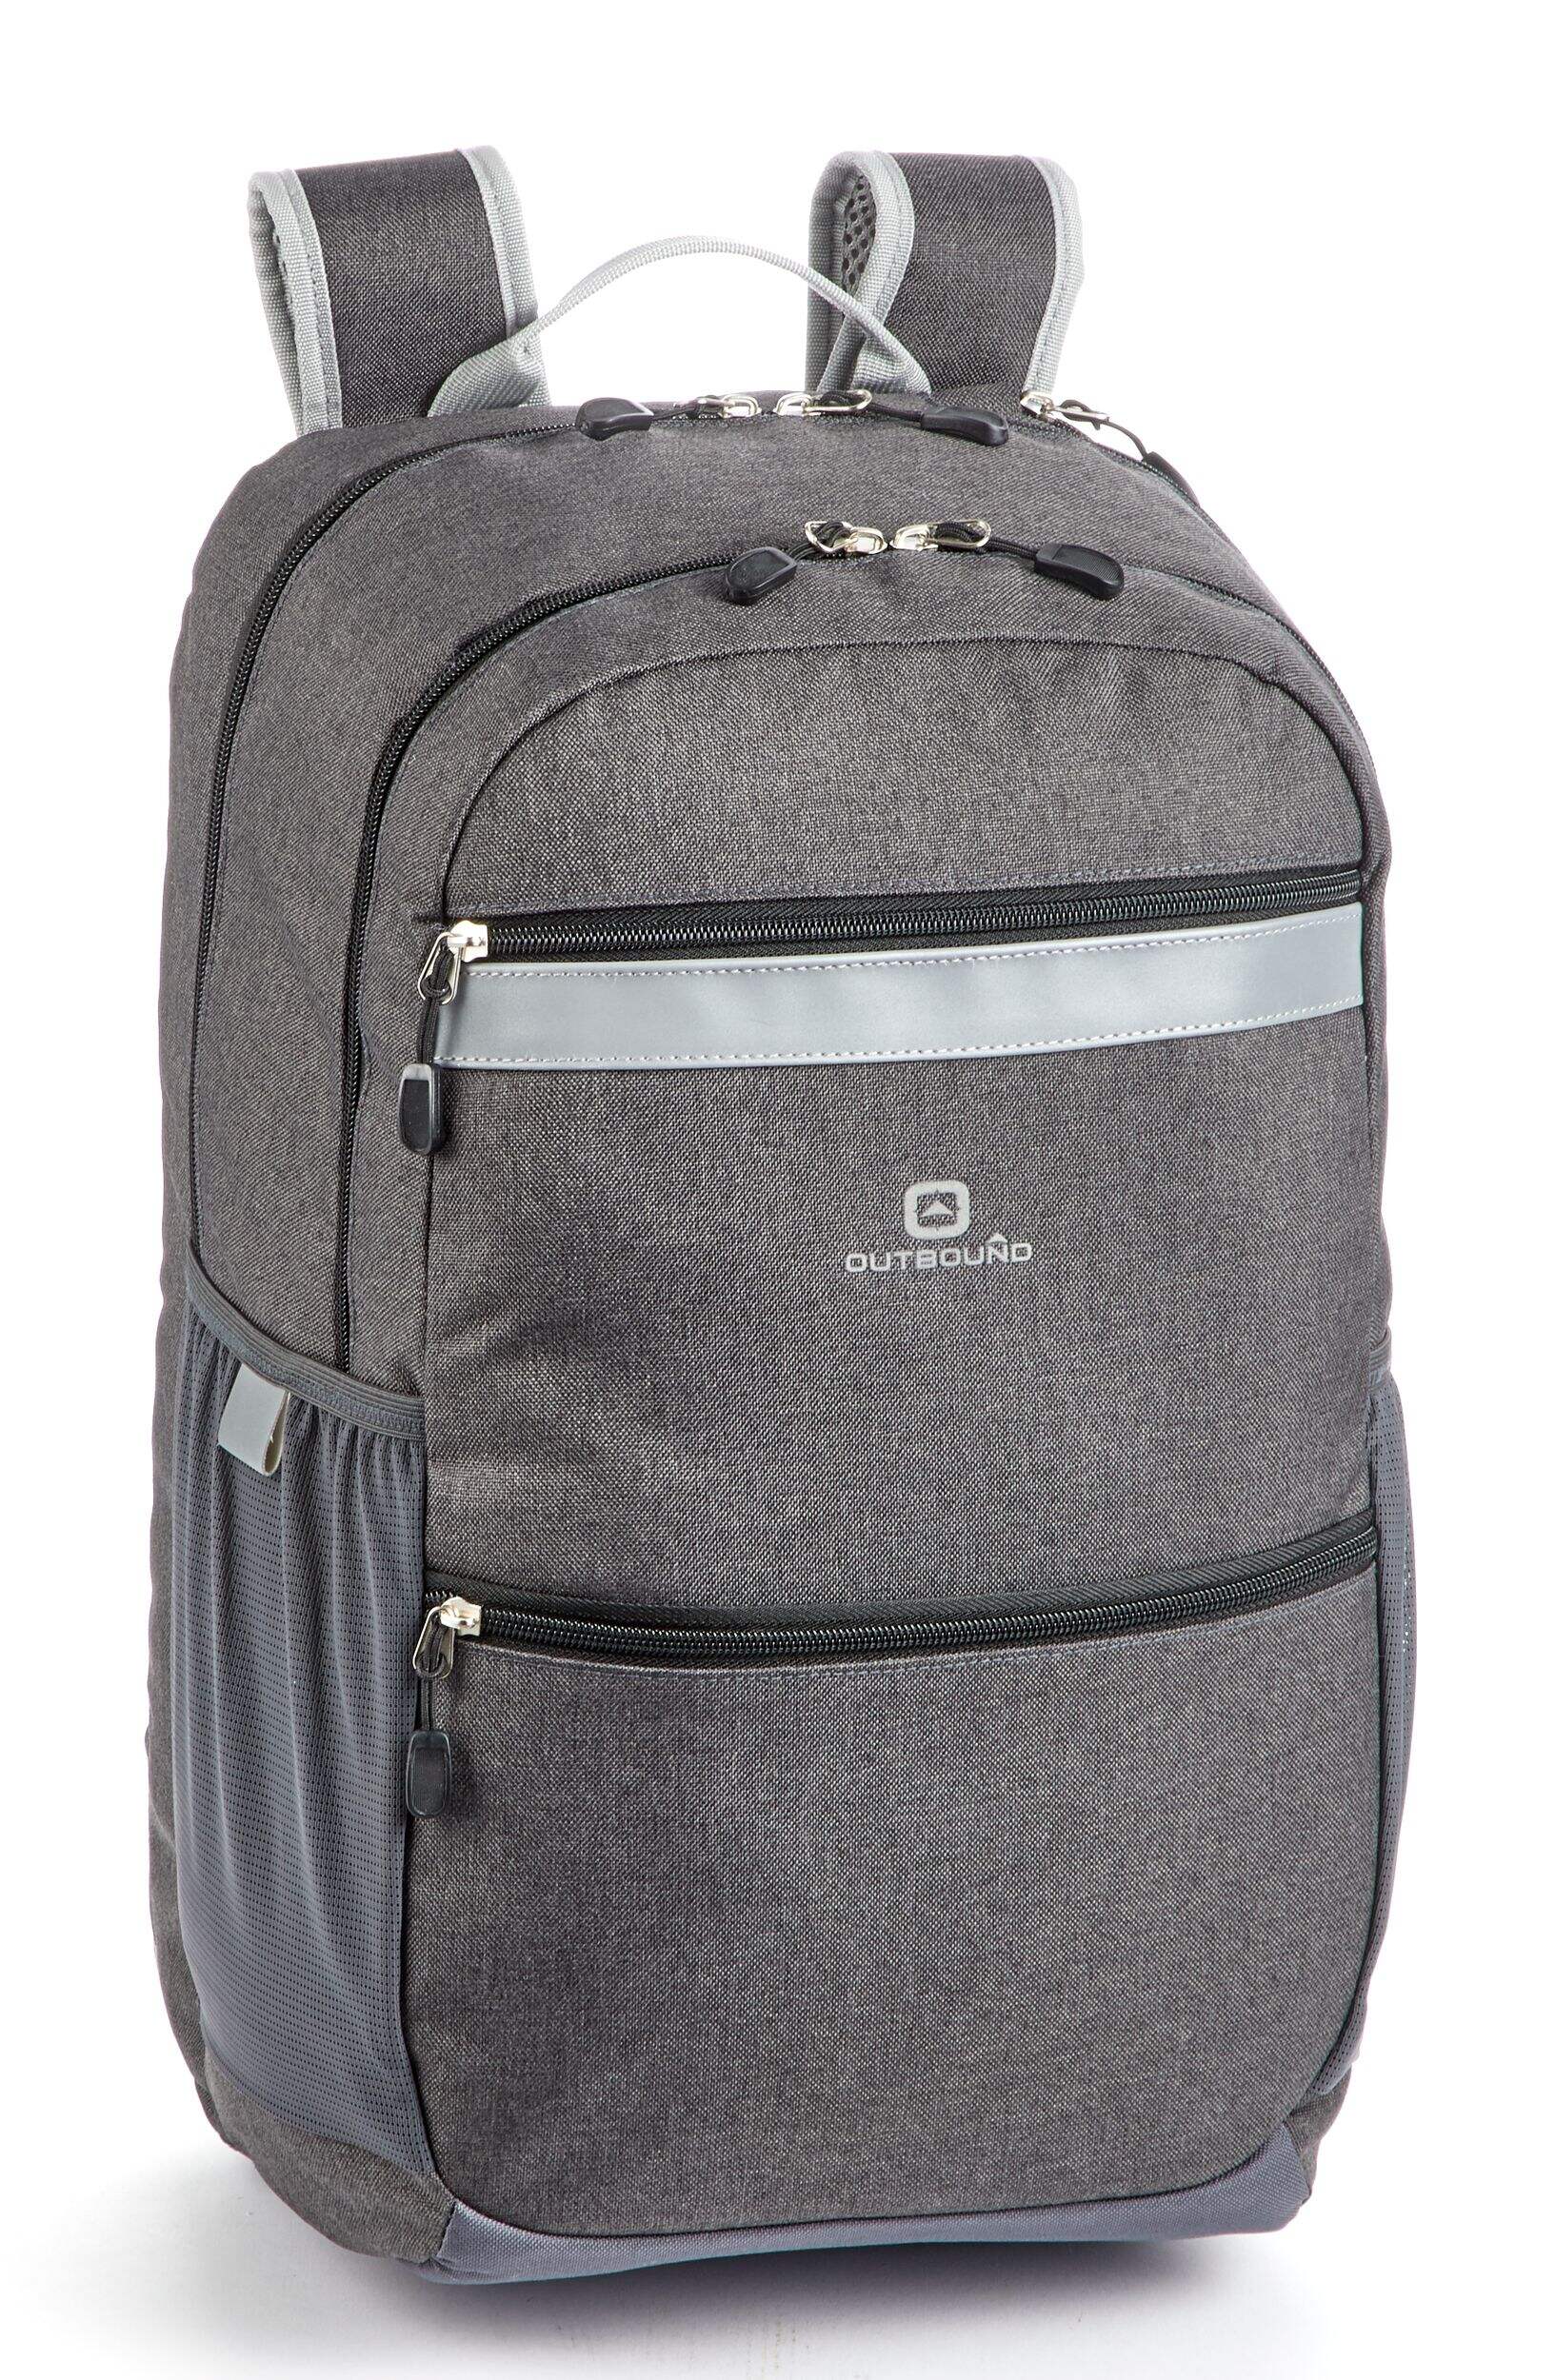 Outbound Commuter Multi-Pocket Laptop Backpack For Work/School/Travel ...